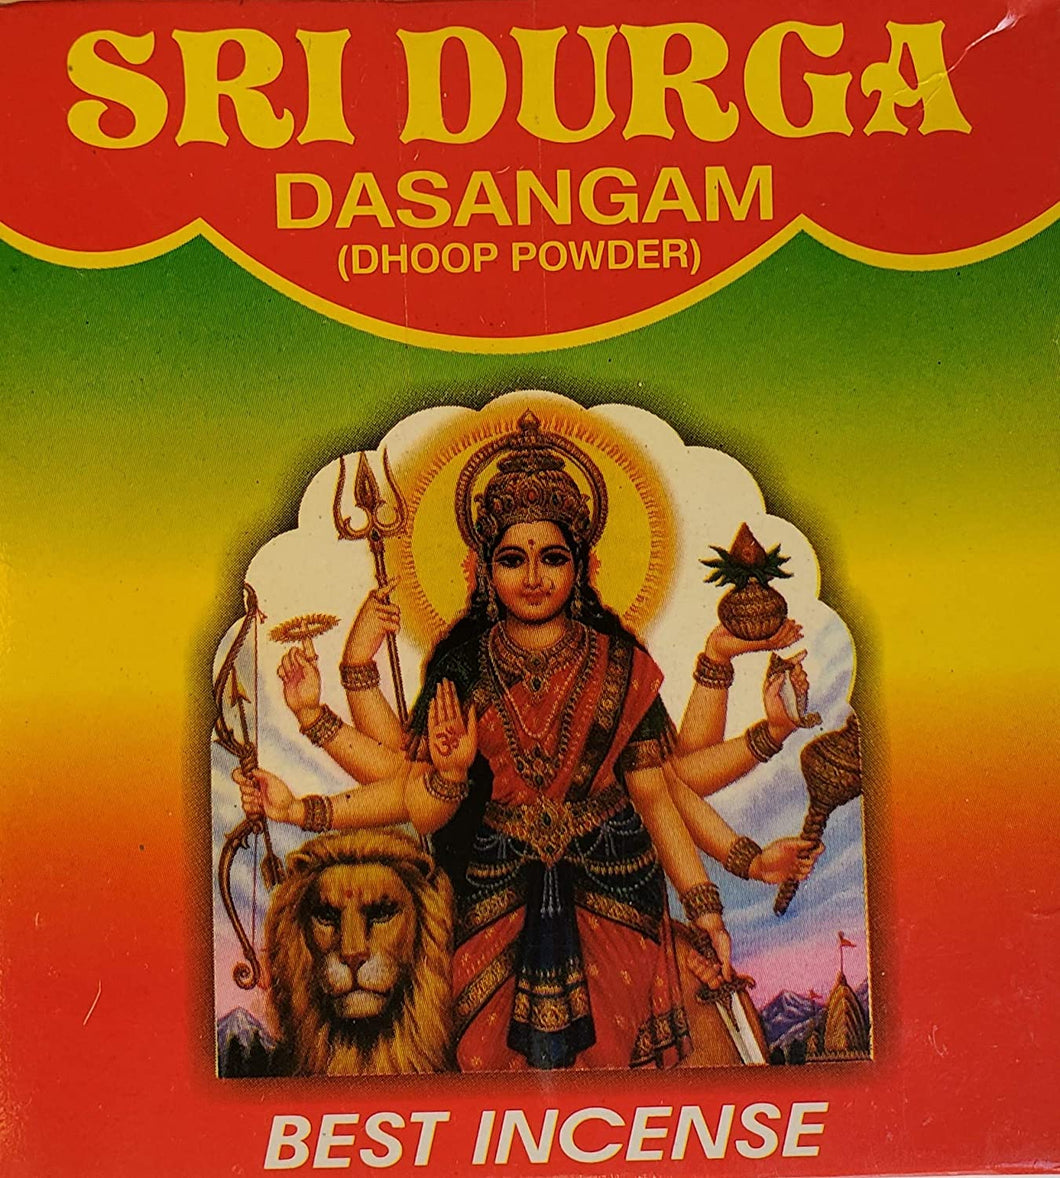 Dasangam Dhoop Powder for Hindu Pooja, Hawan, Festival, 50 gm